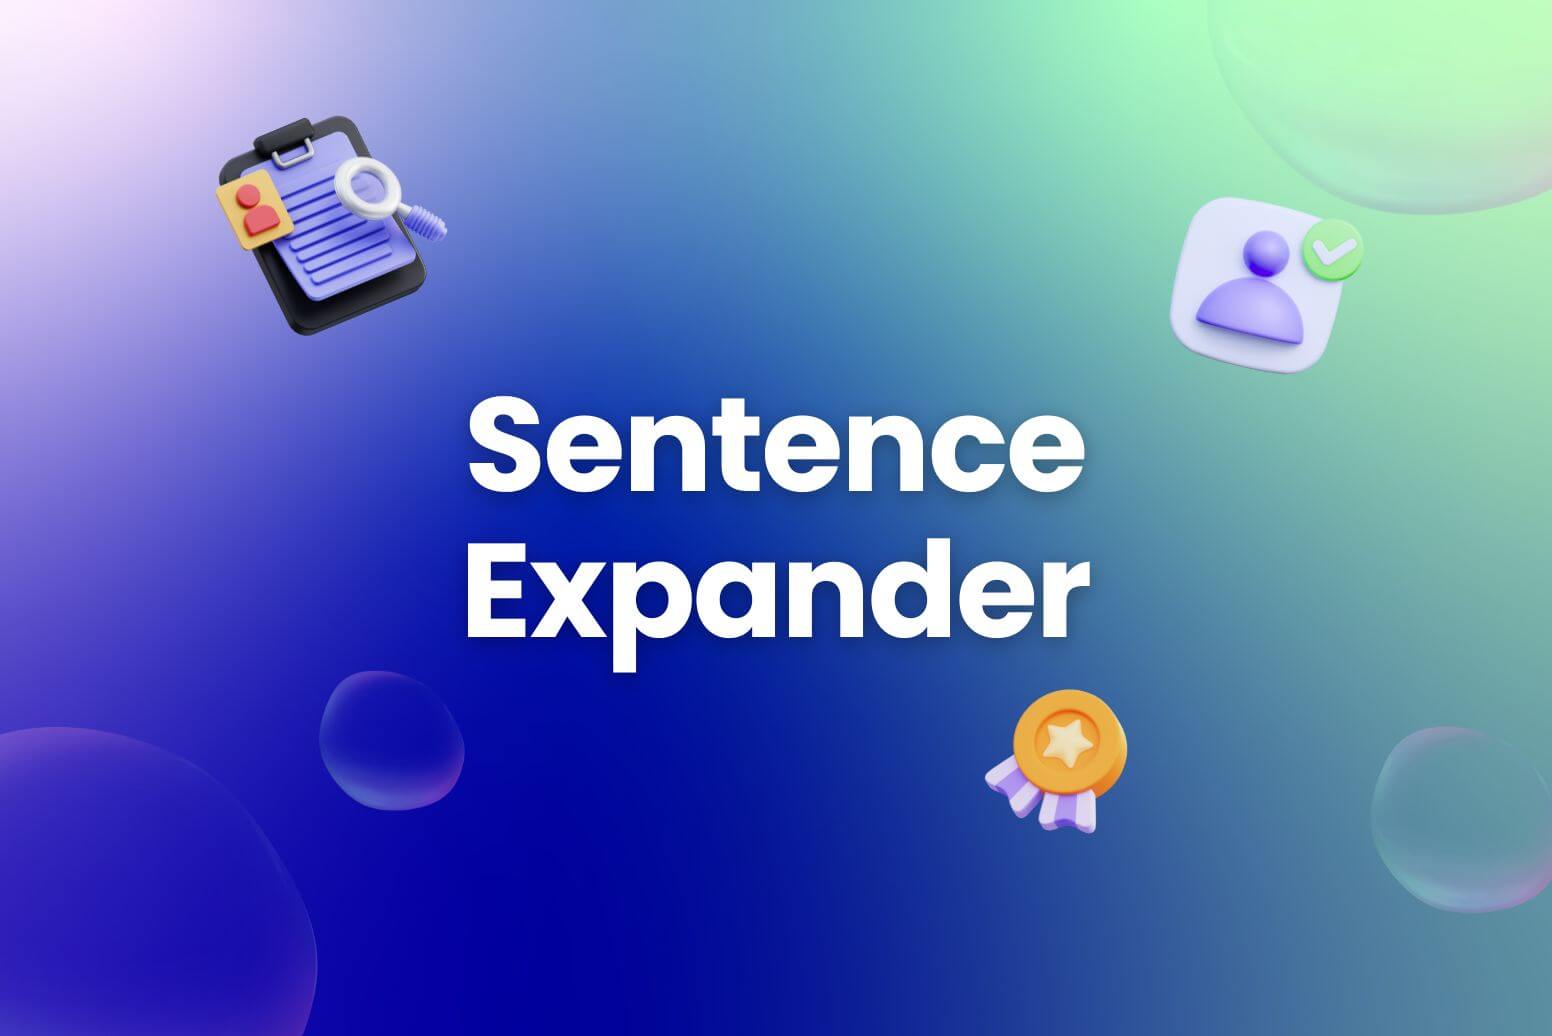 Sentence Expander